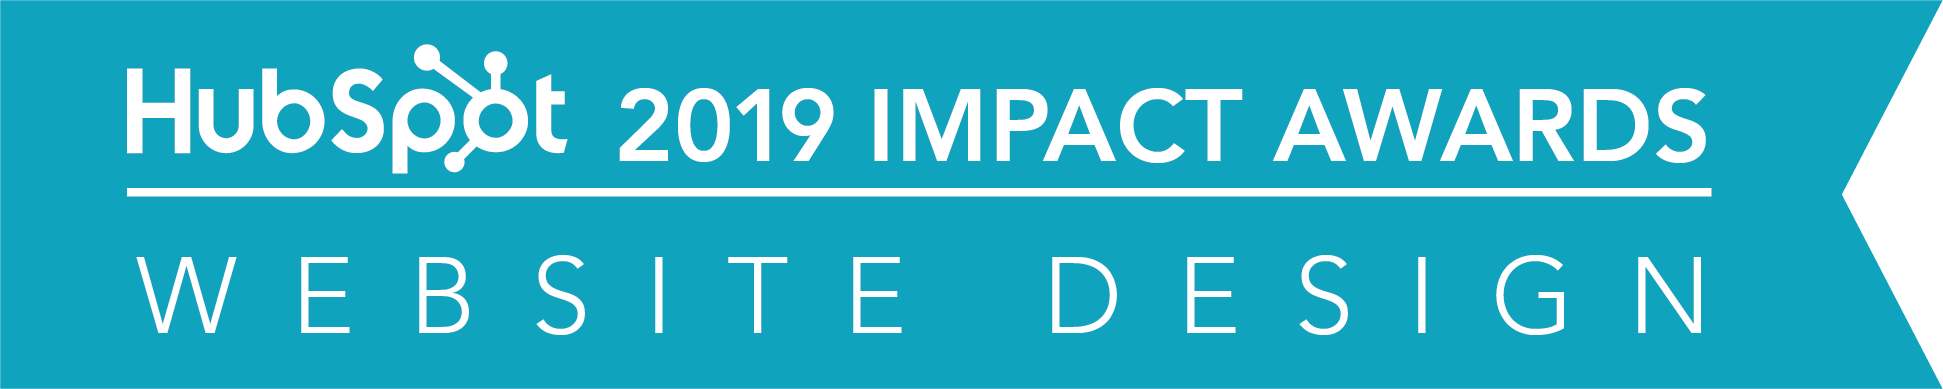 Hubspot_ImpactAwards_2019_WebsiteDesign-02-1